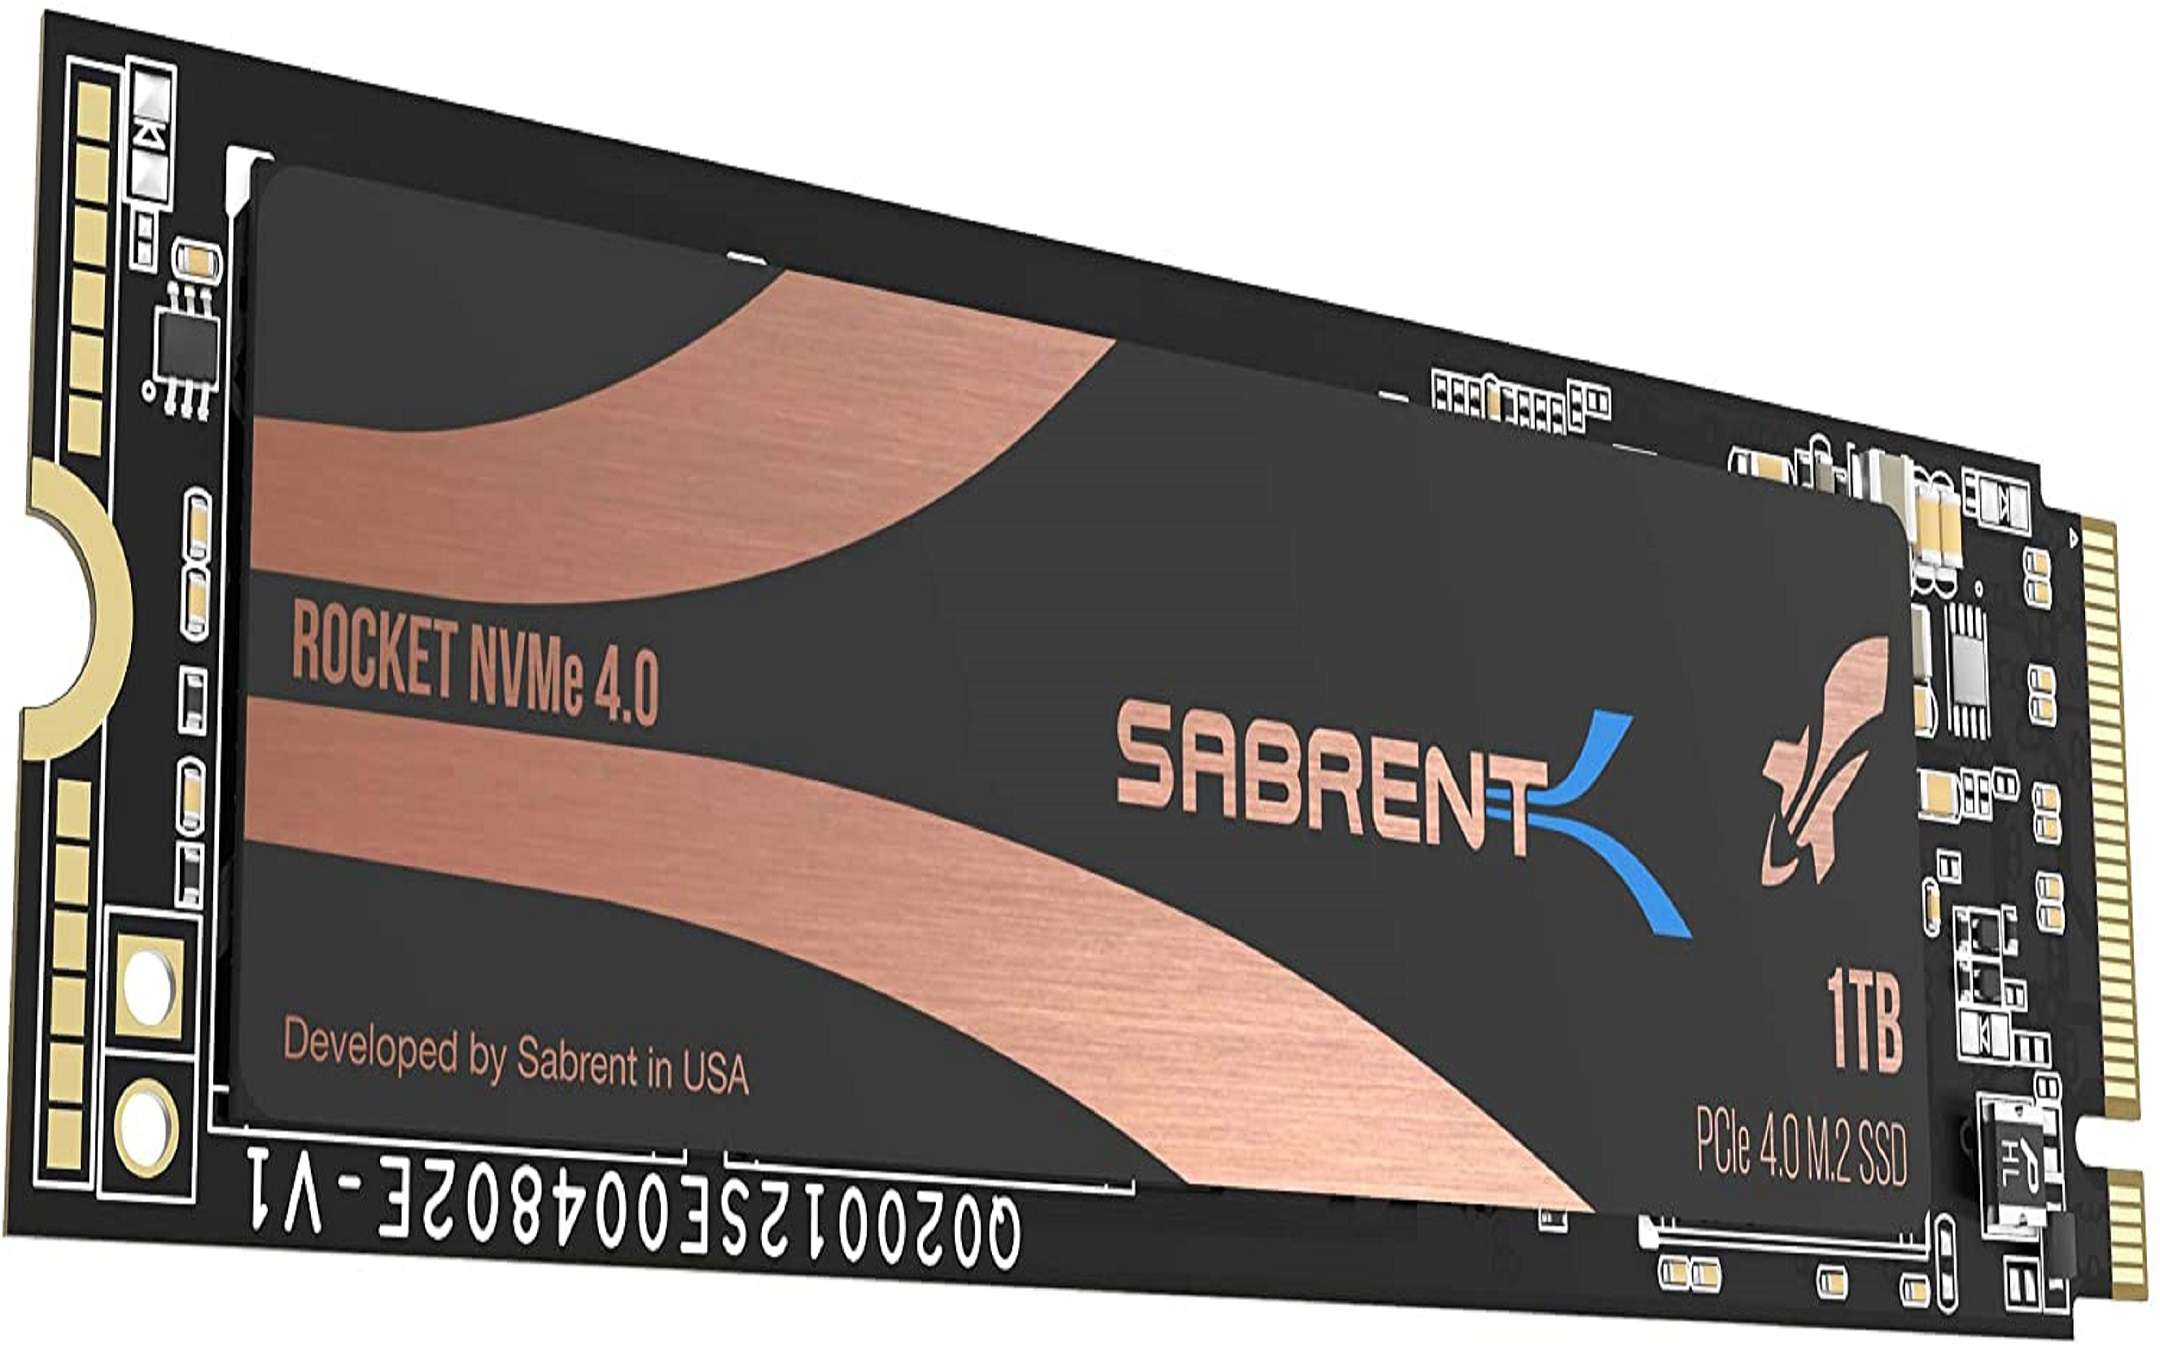 1TB PCIe 4.0 SSD for less than 150 euros on Amazon